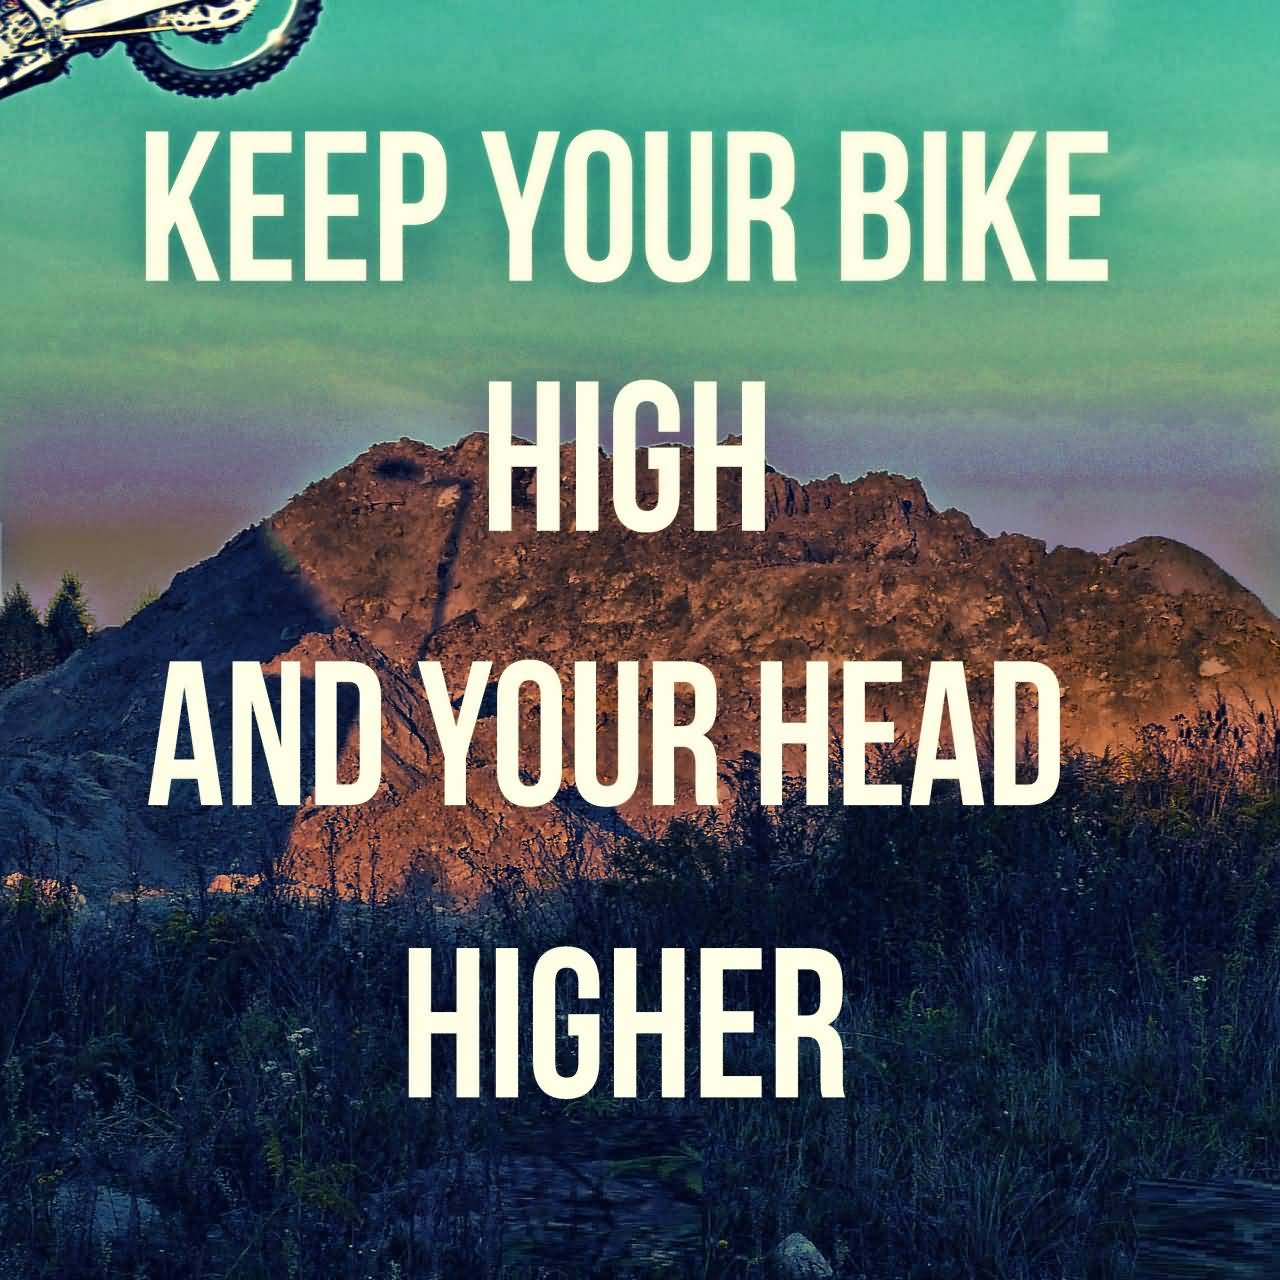 biker wallpaper quotes